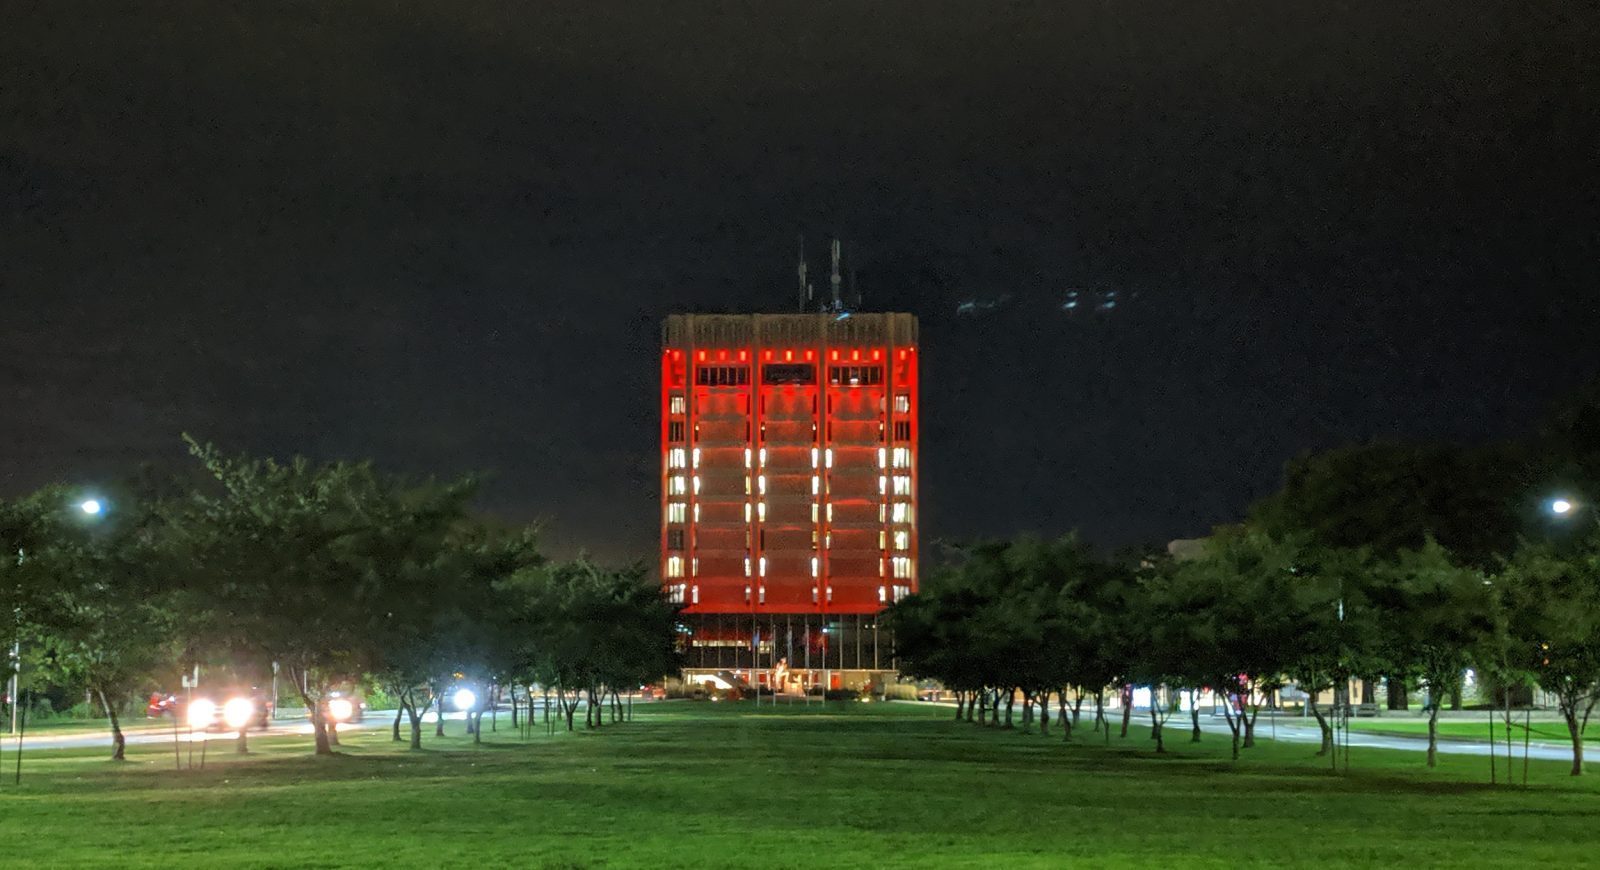 Brock's Schmon Tower illuminated in red light against a dark night sky.